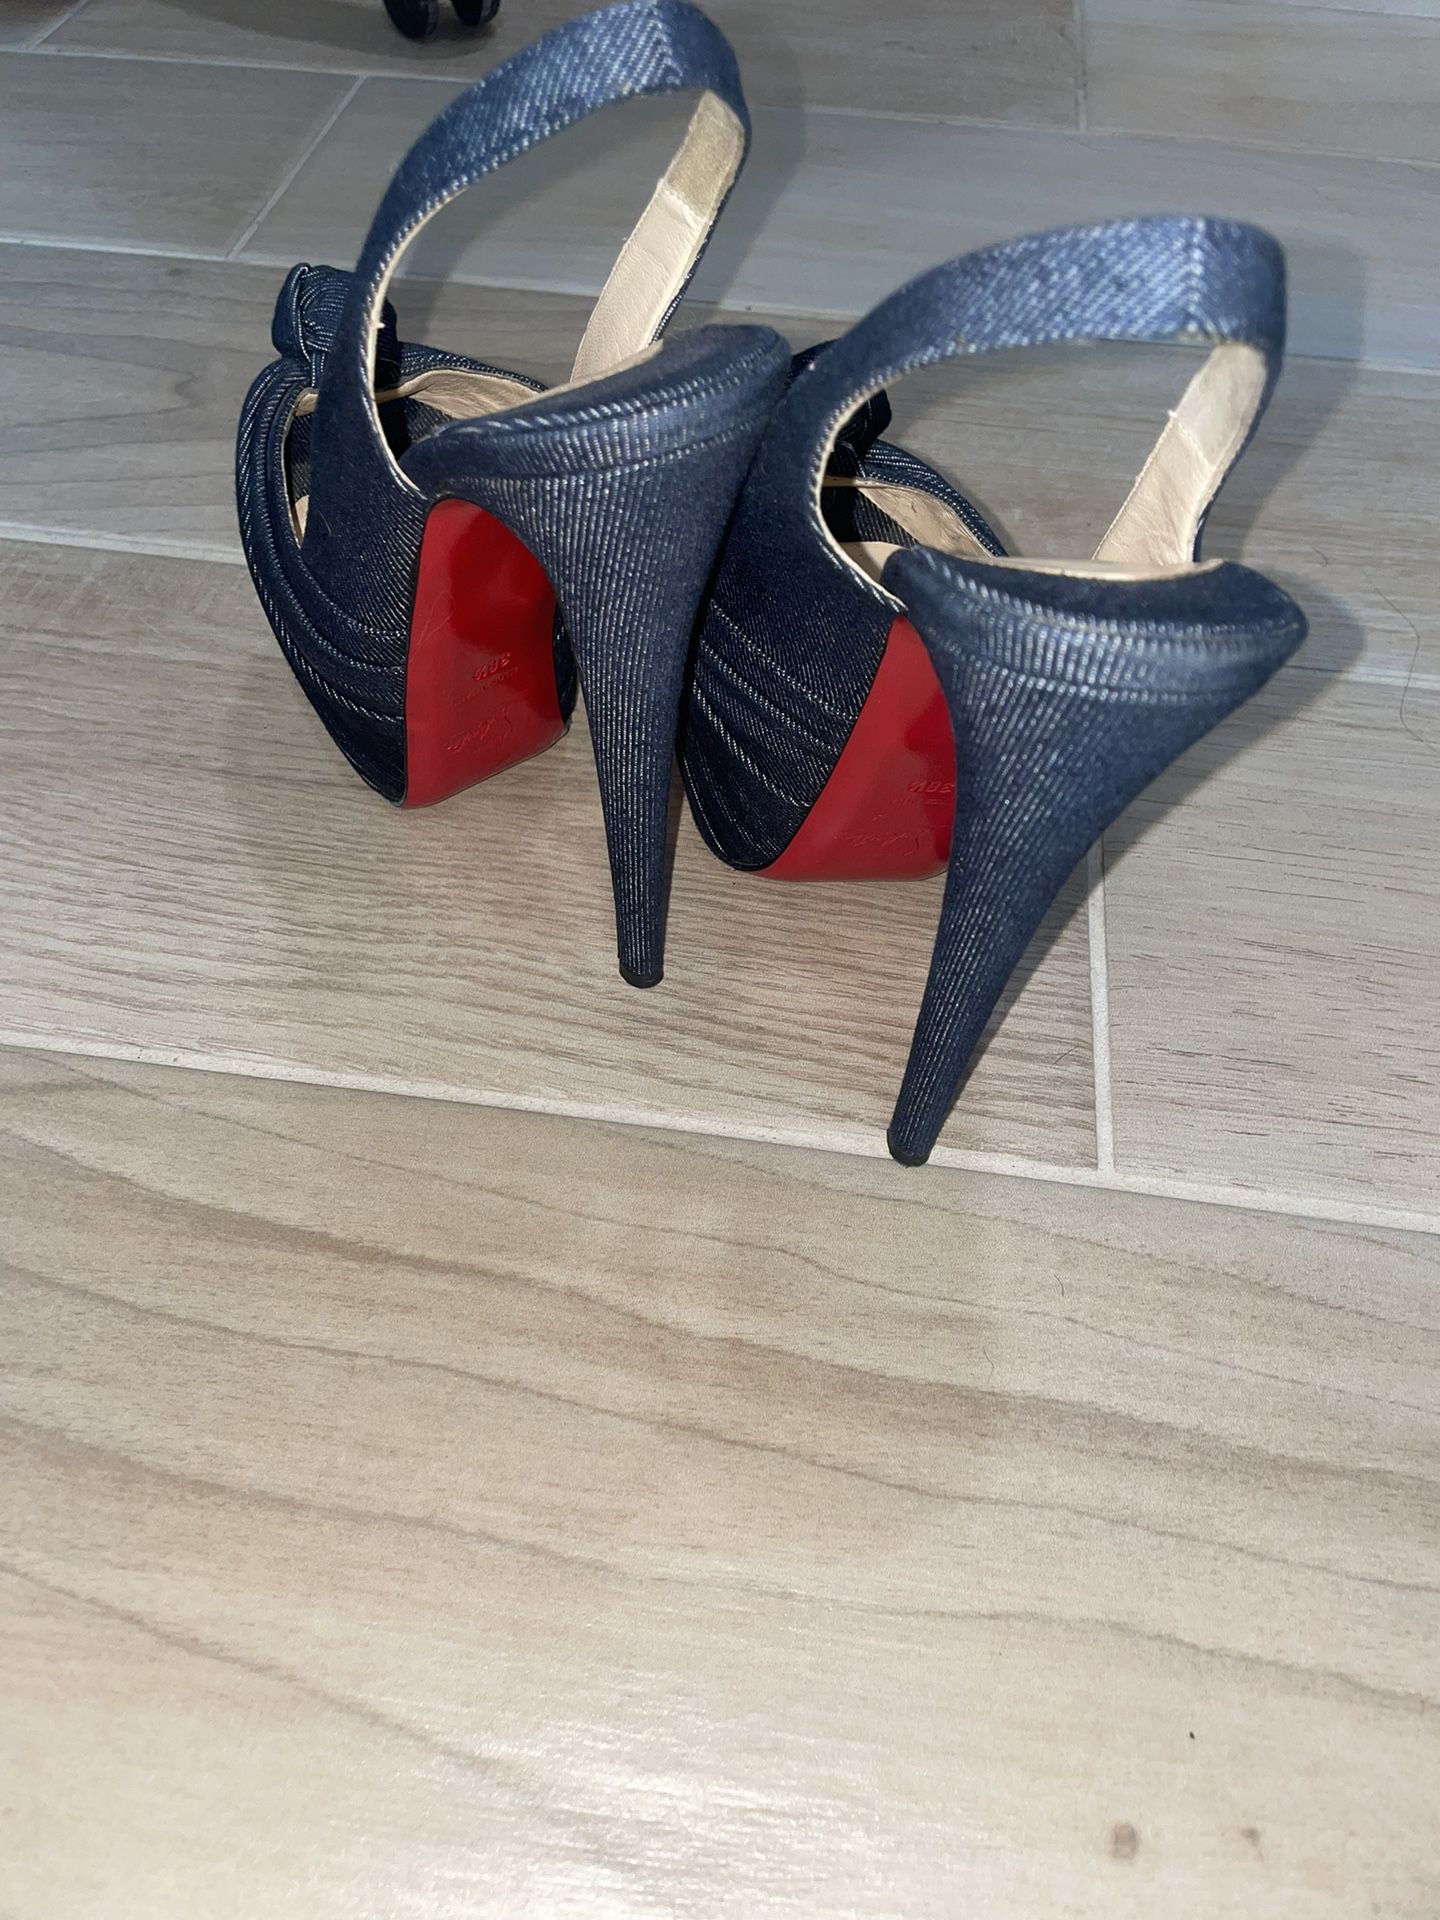 Louis Vuitton Boots/heels for Sale in Tempe, AZ - OfferUp